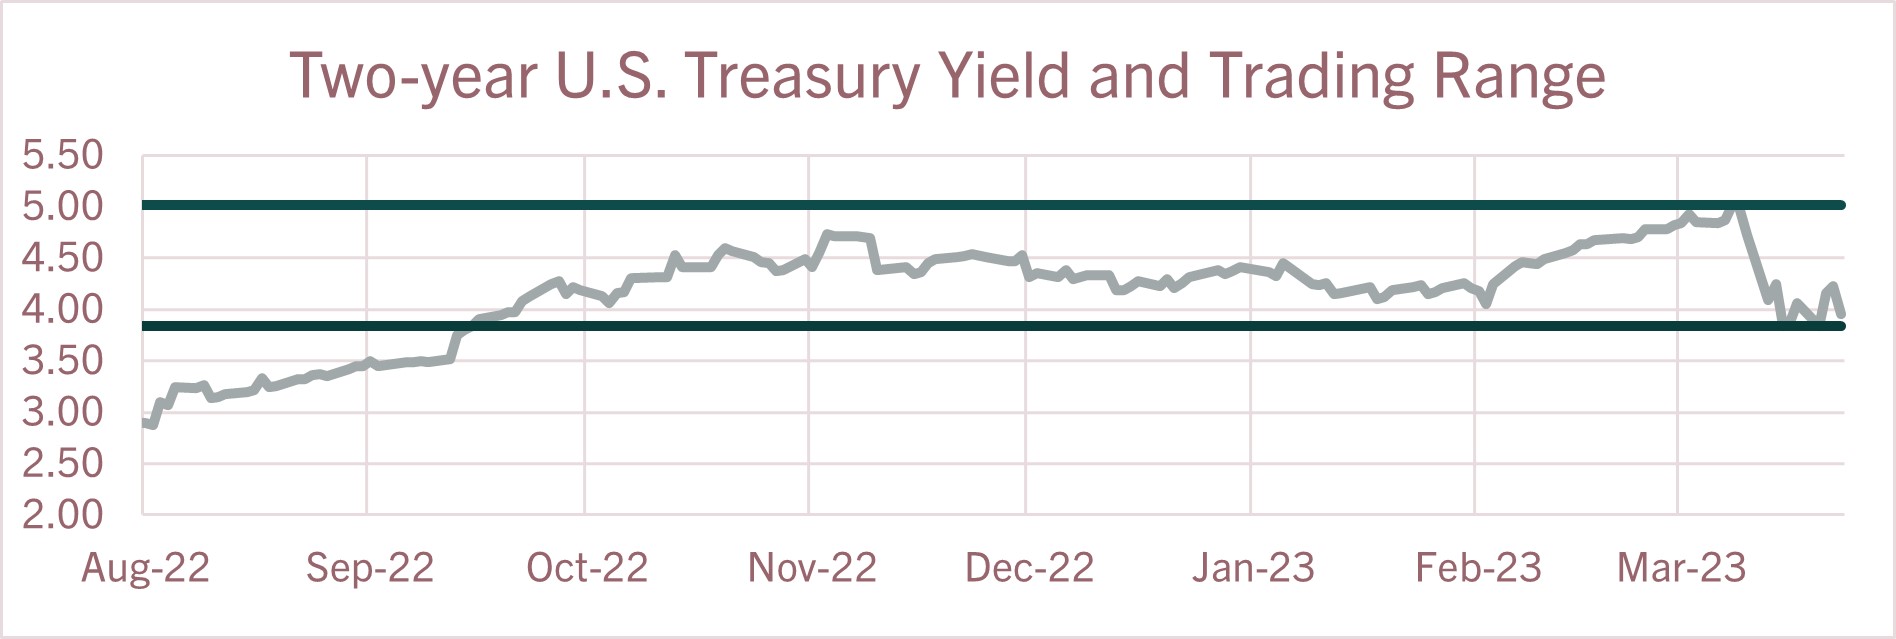 Two-year Treasury Yield and Trading Range